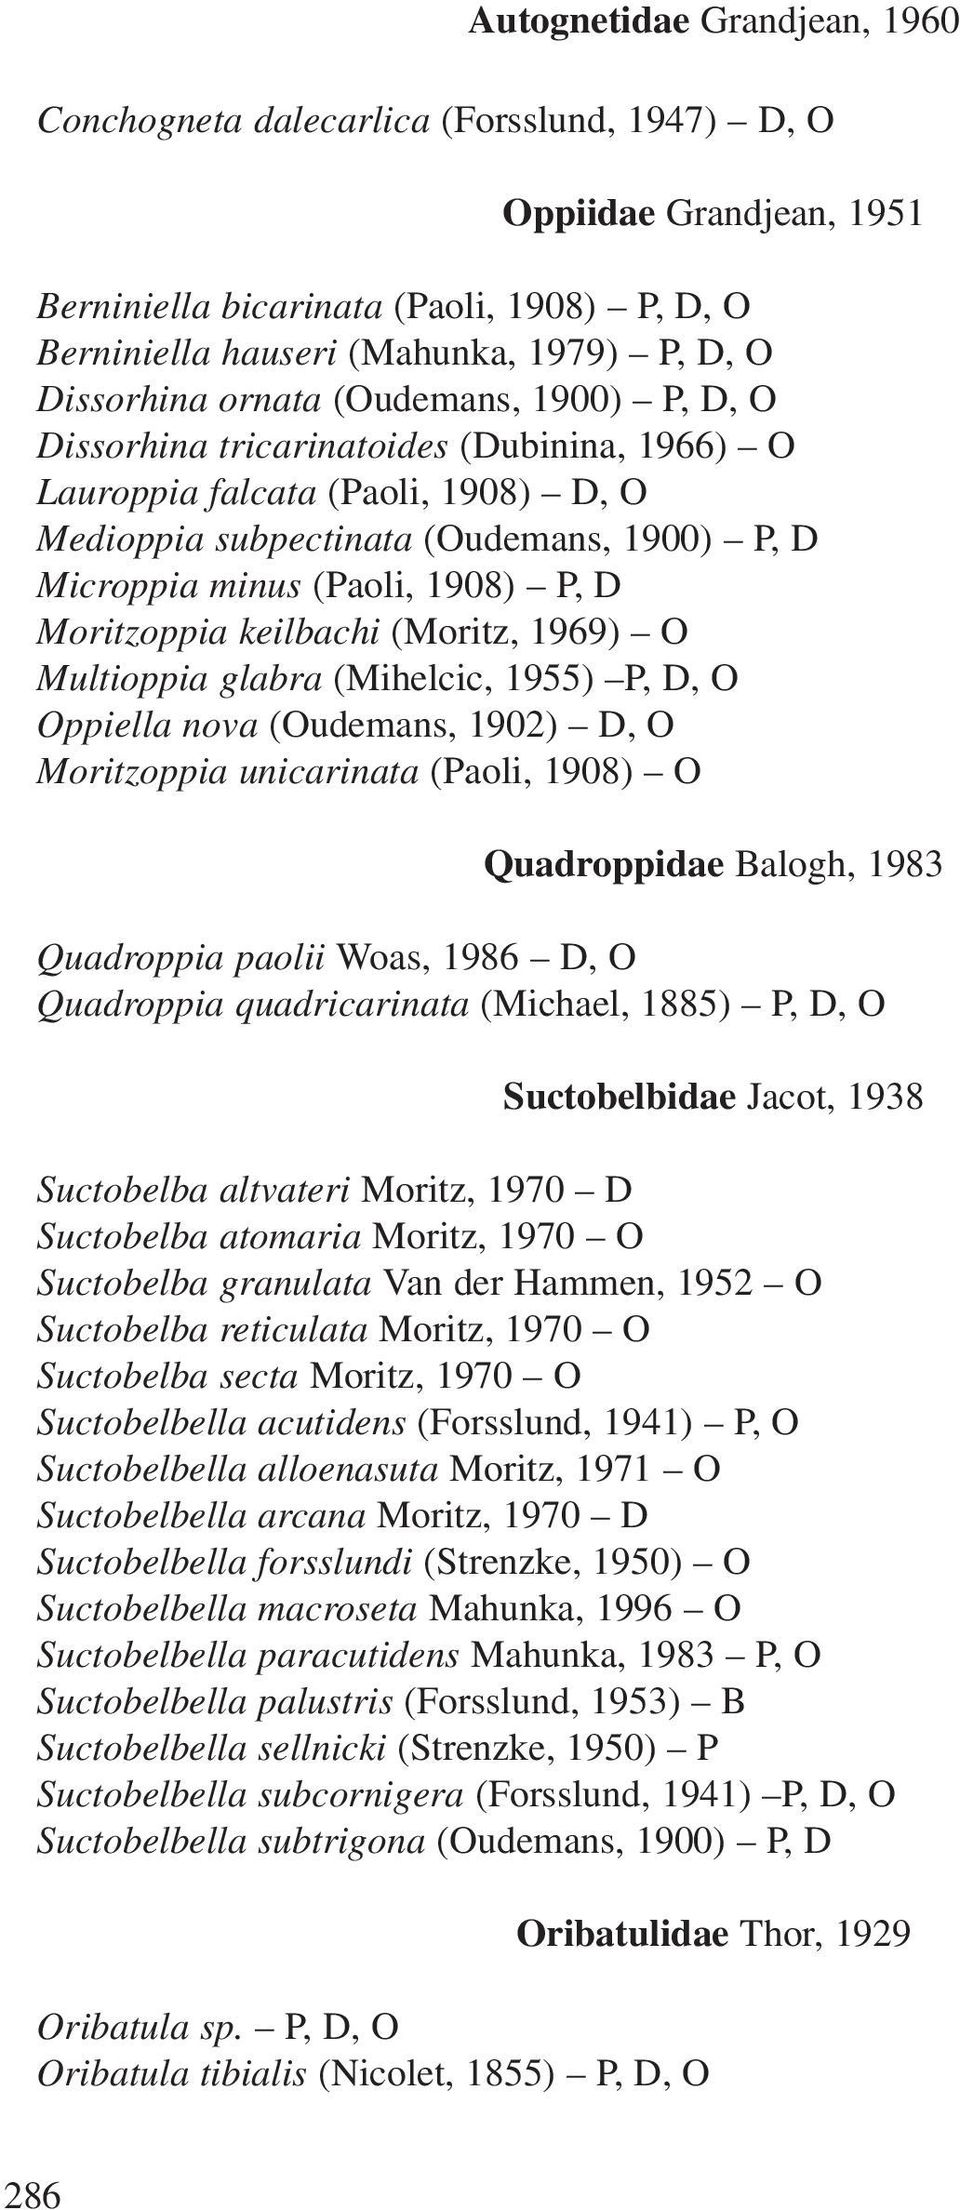 1908) P, D Moritzoppia keilbachi (Moritz, 1969) O Multioppia glabra (Mihelcic, 1955) P, D, O Oppiella nova (Oudemans, 1902) D, O Moritzoppia unicarinata (Paoli, 1908) O Quadroppidae Balogh, 1983